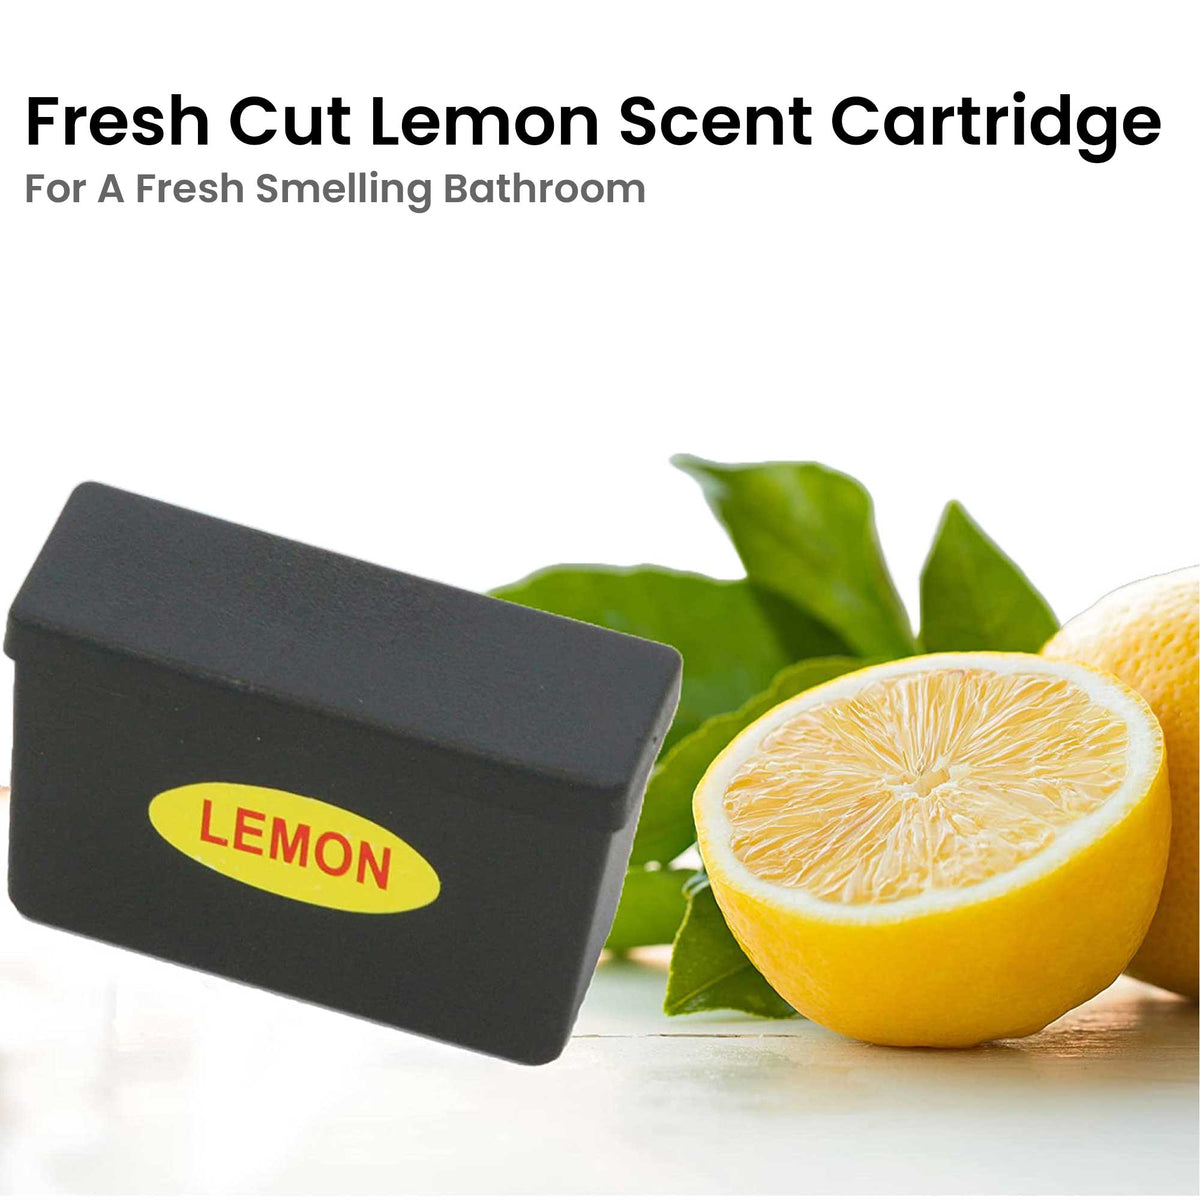 2.5 Gallon / 9.5 Liter White Sensor Bathroom Trash Can with Odor Filter and Lemon Fragrance for a fresh smelling bathroom